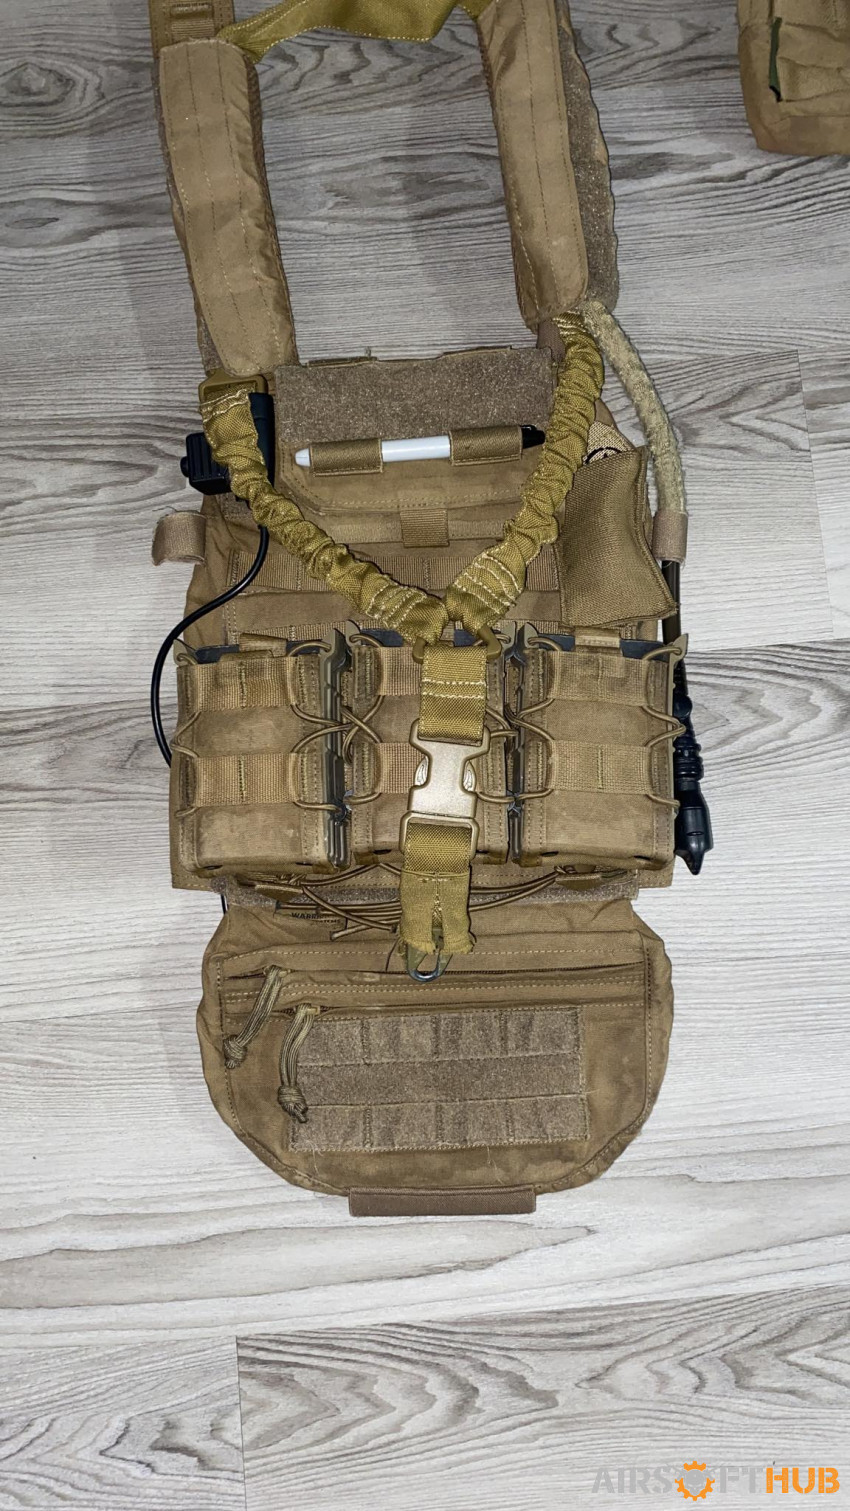 Warrior assault system + belt - Used airsoft equipment